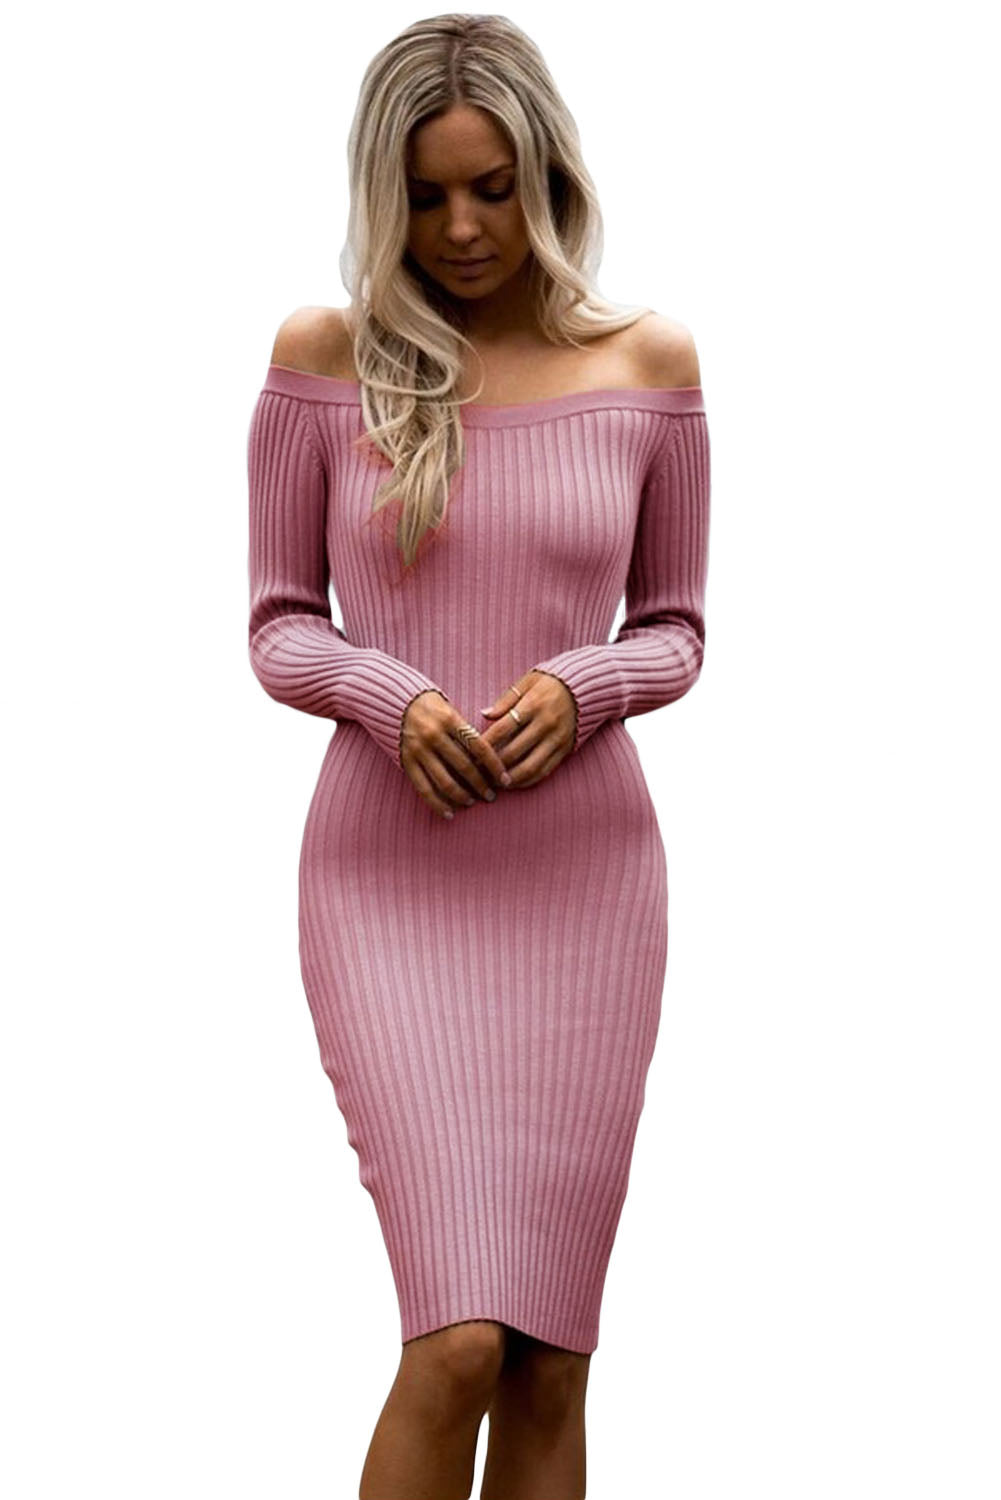 hot pink knit dress